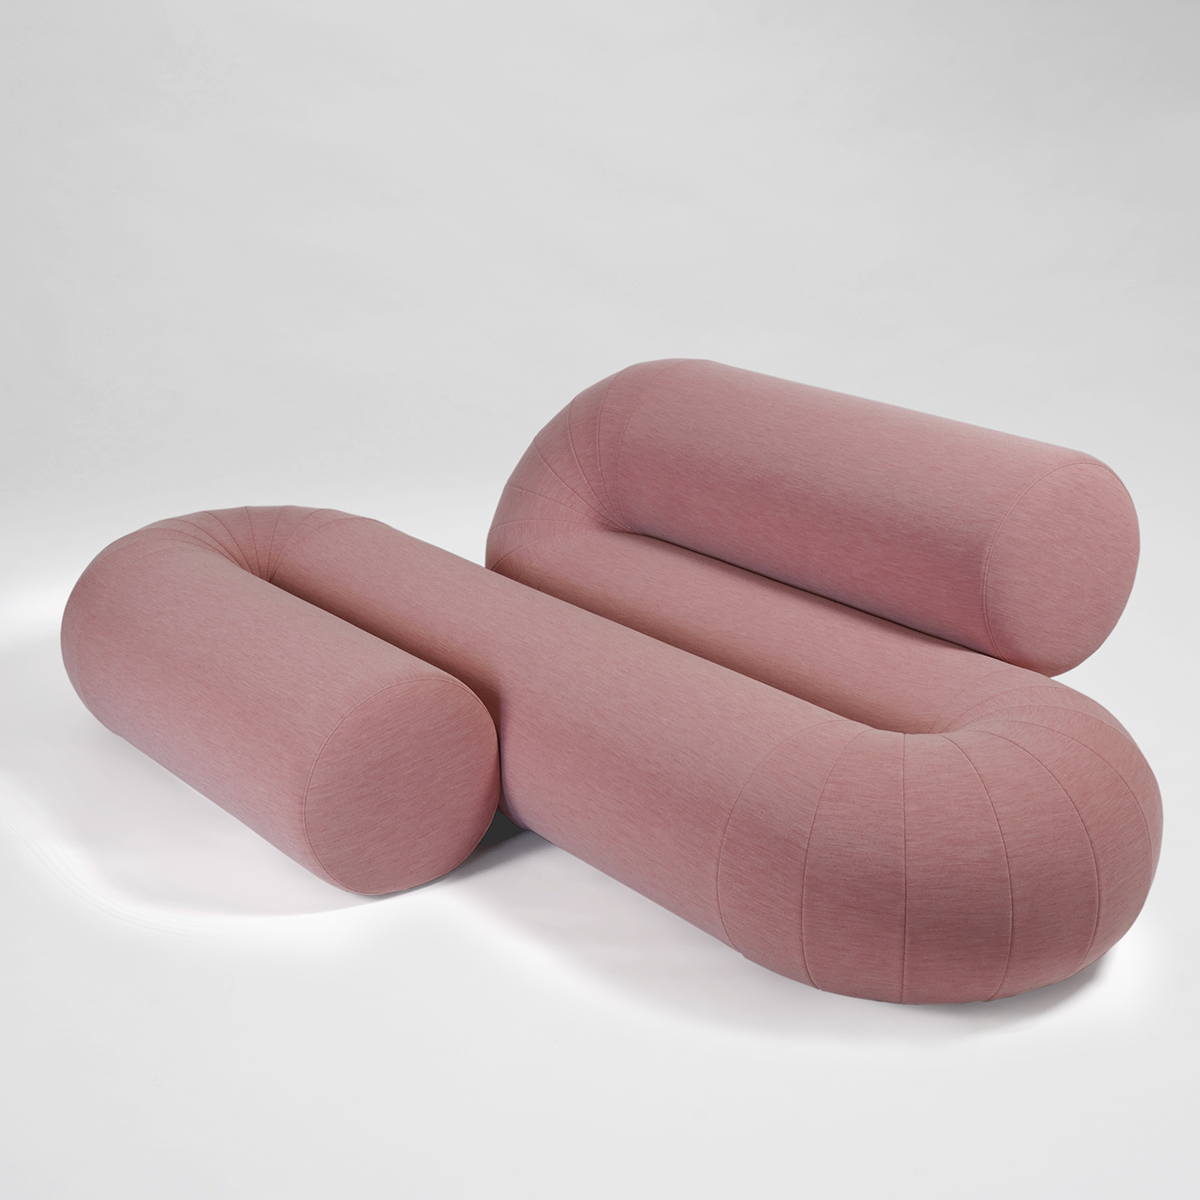 Serpentine lounge sofa system by Christophe de la Fontaine DANTE - Goods and Bads